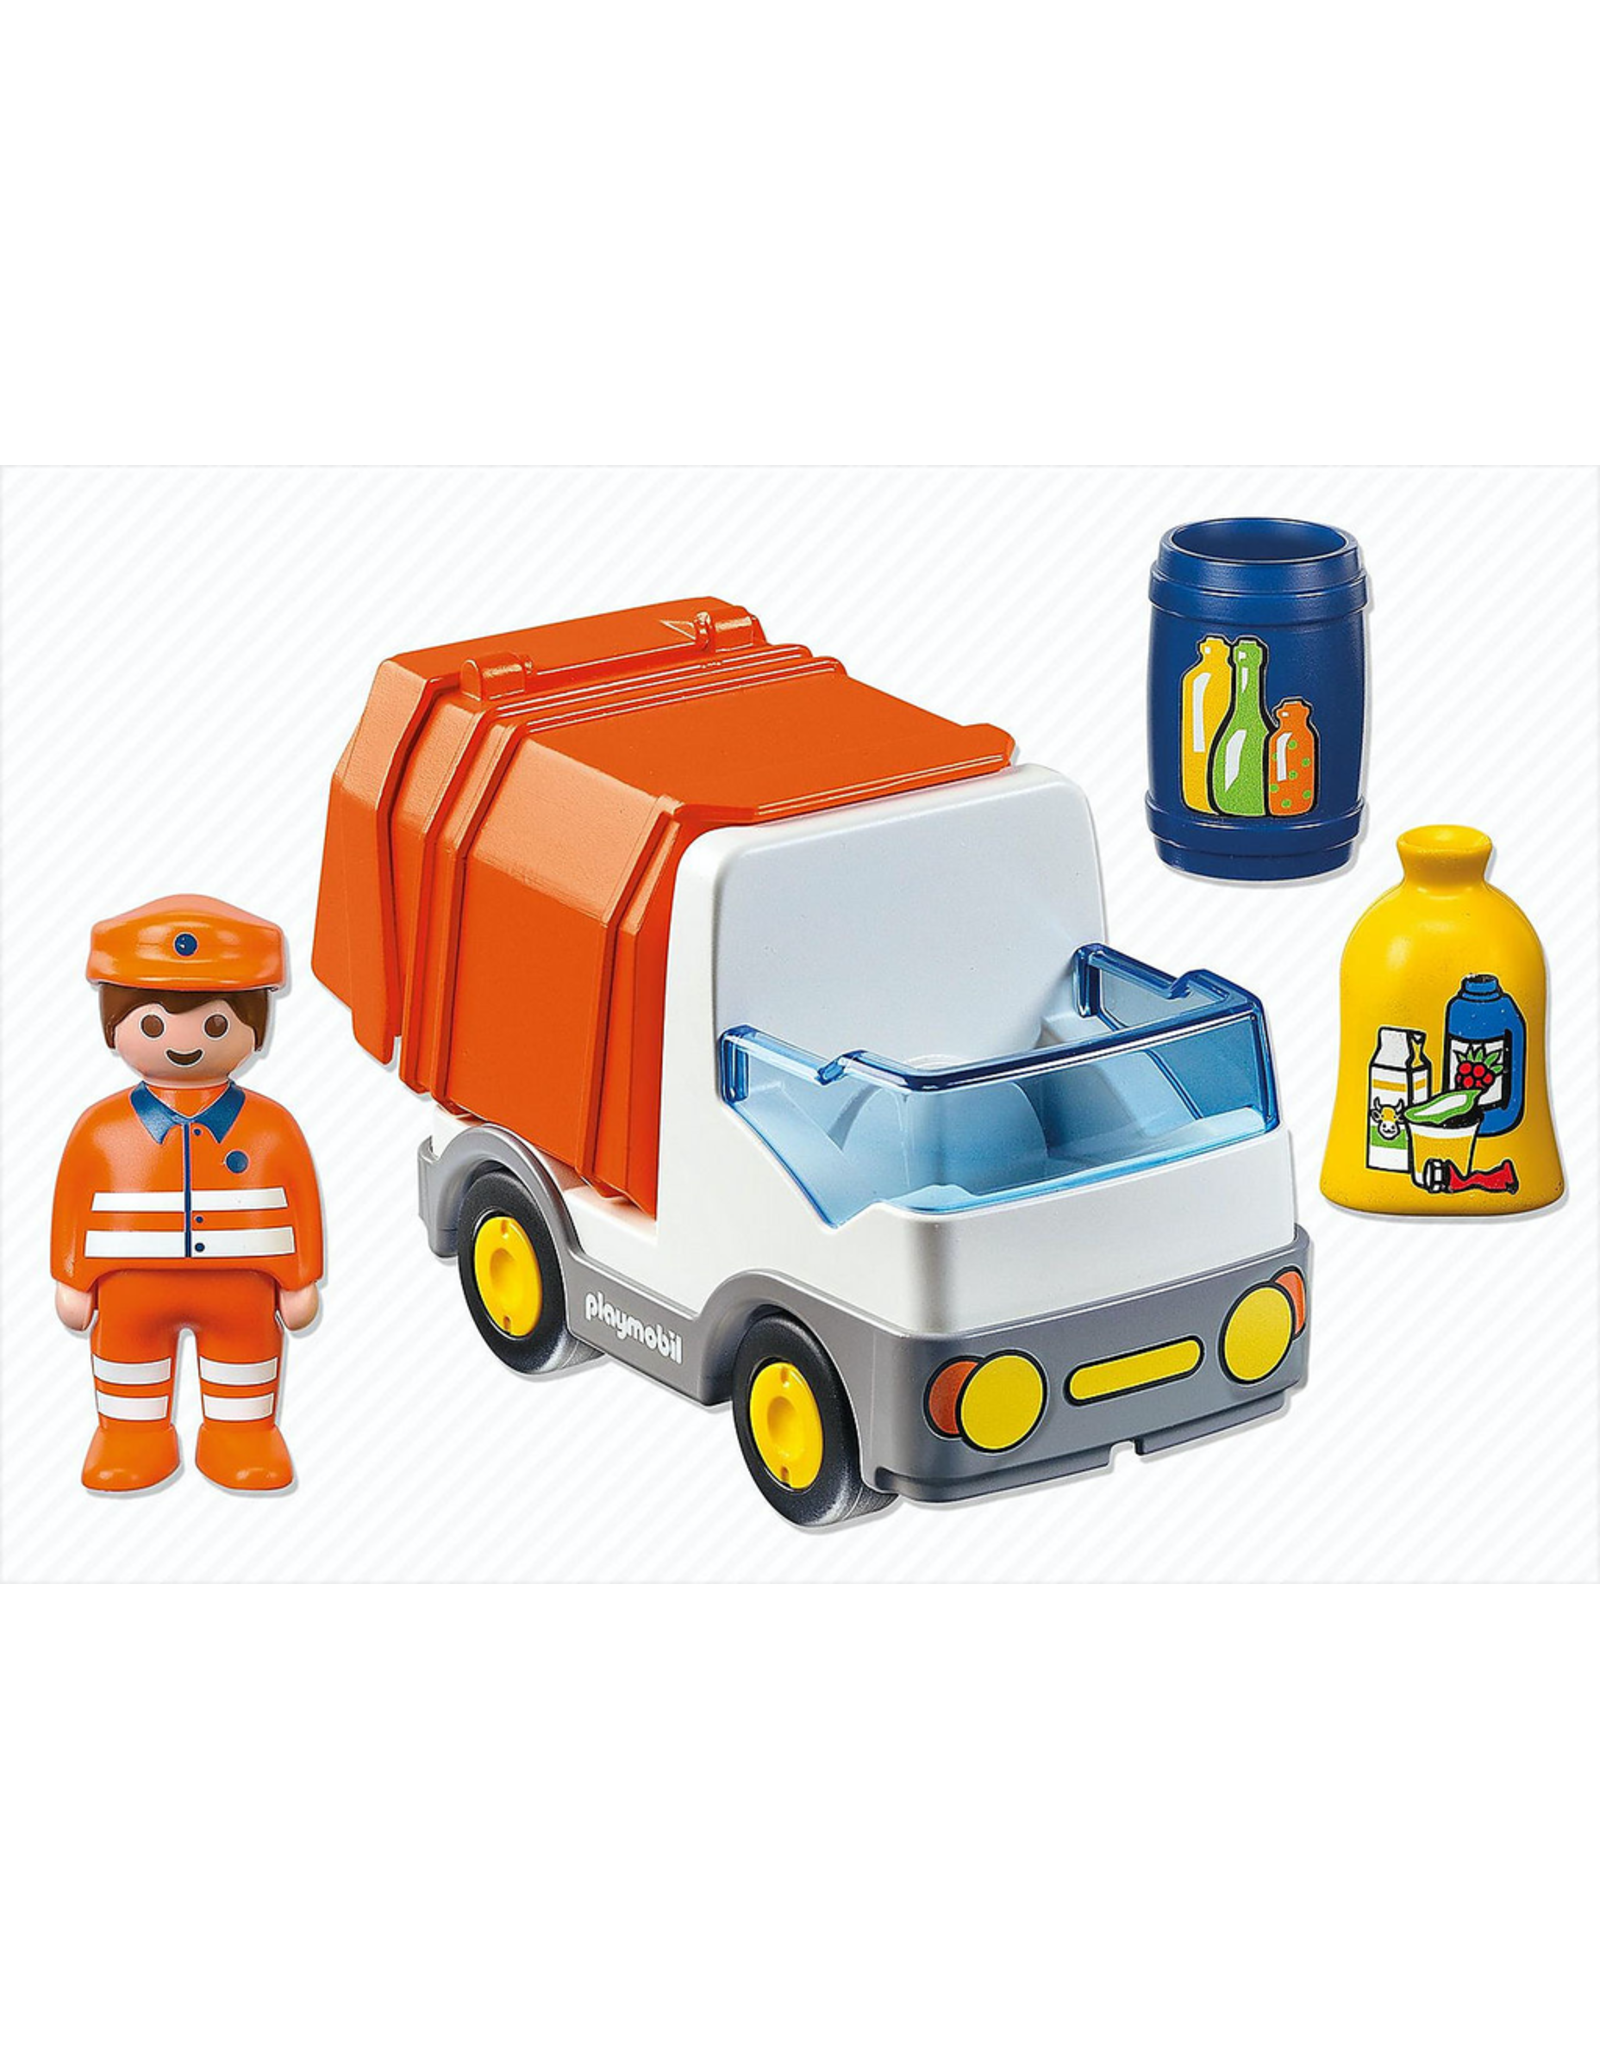 Playmobil 1.2.3 Recycling Truck 6774